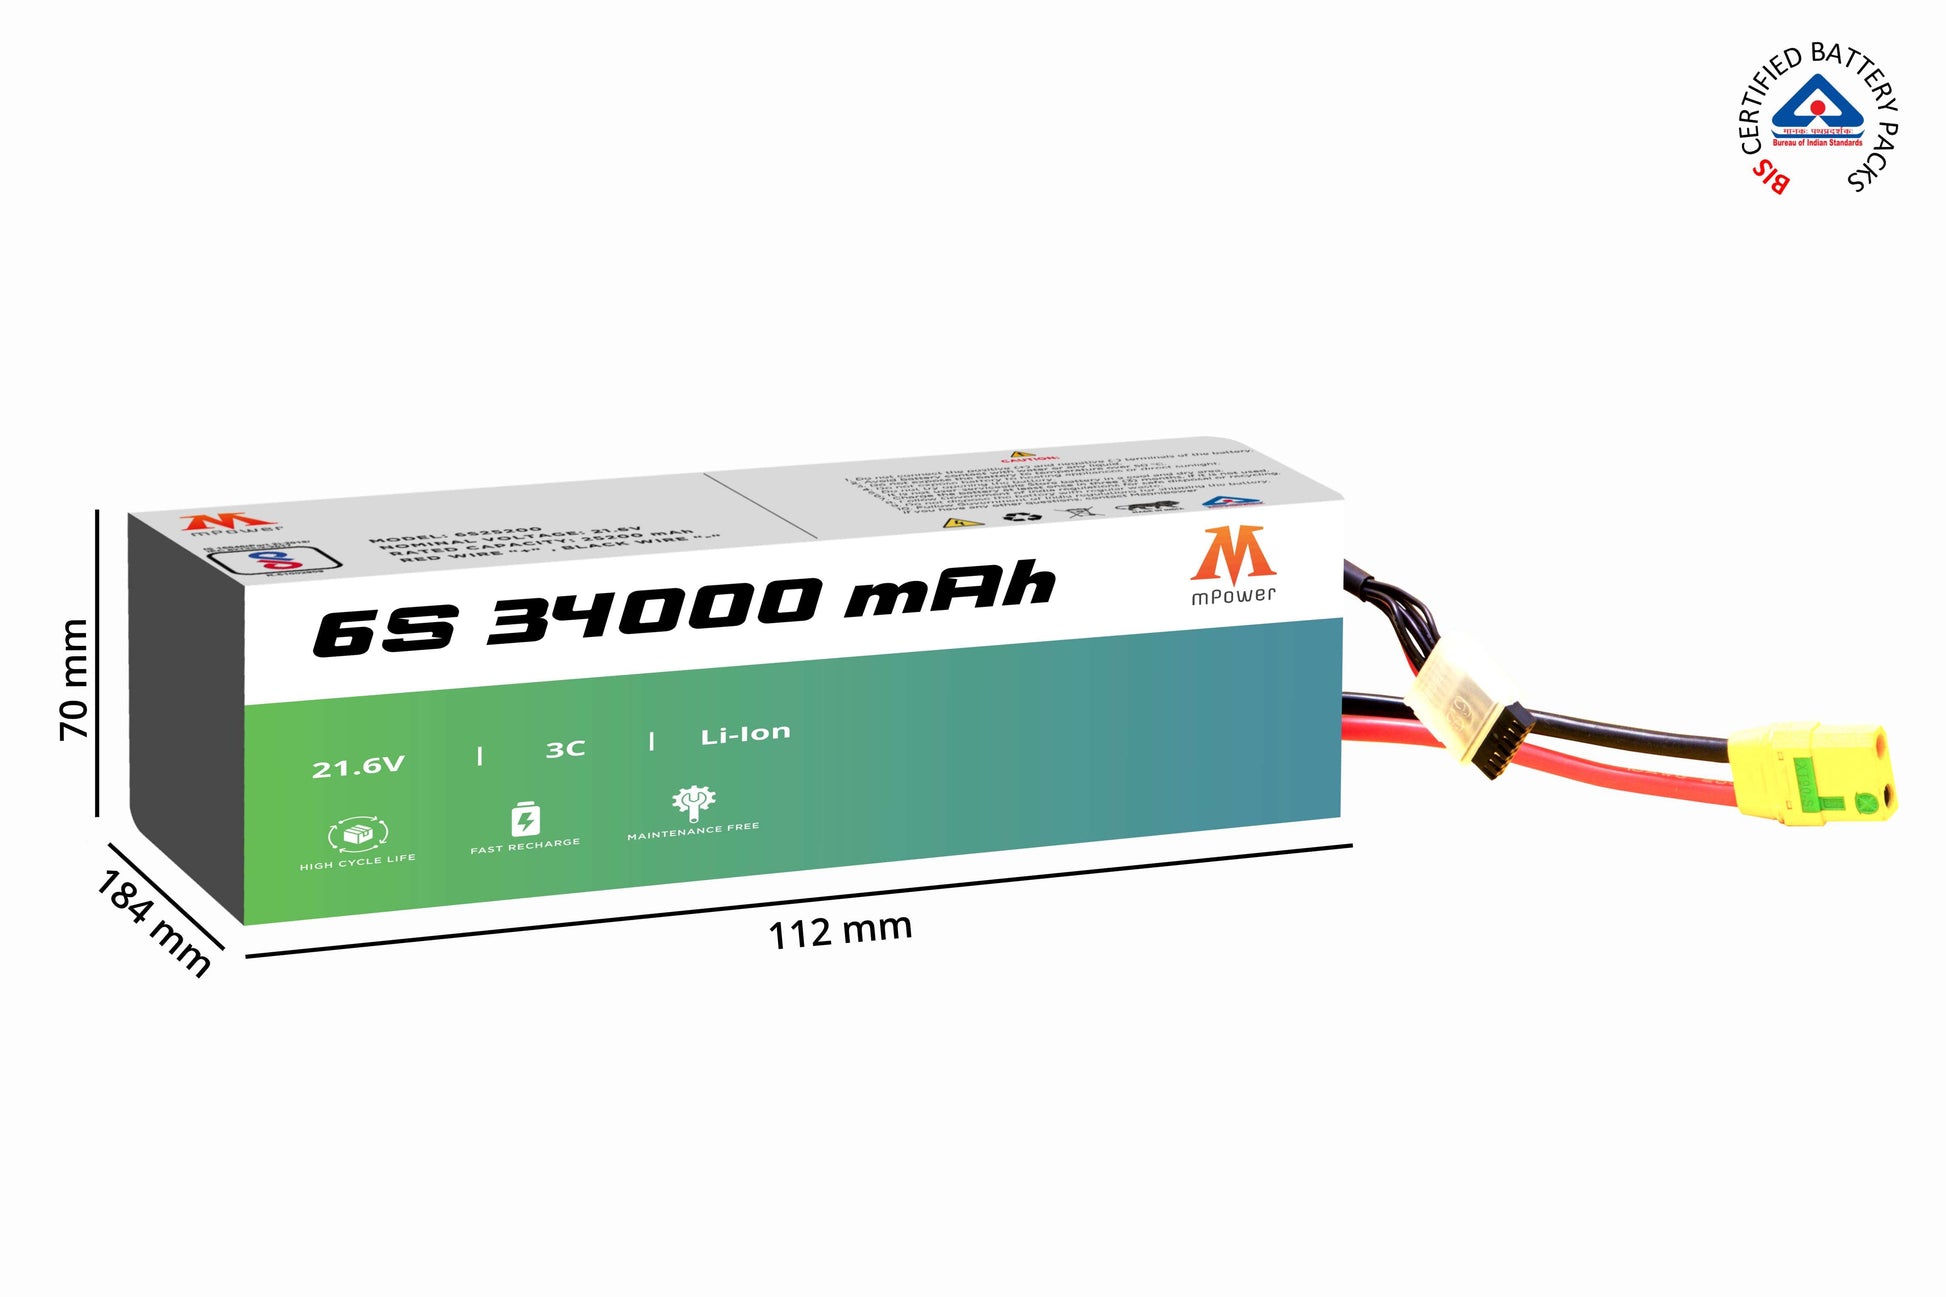 mPower 6S 34000mAh Lithium-Ion Battery for Surveillance Drones-mpowerlithium